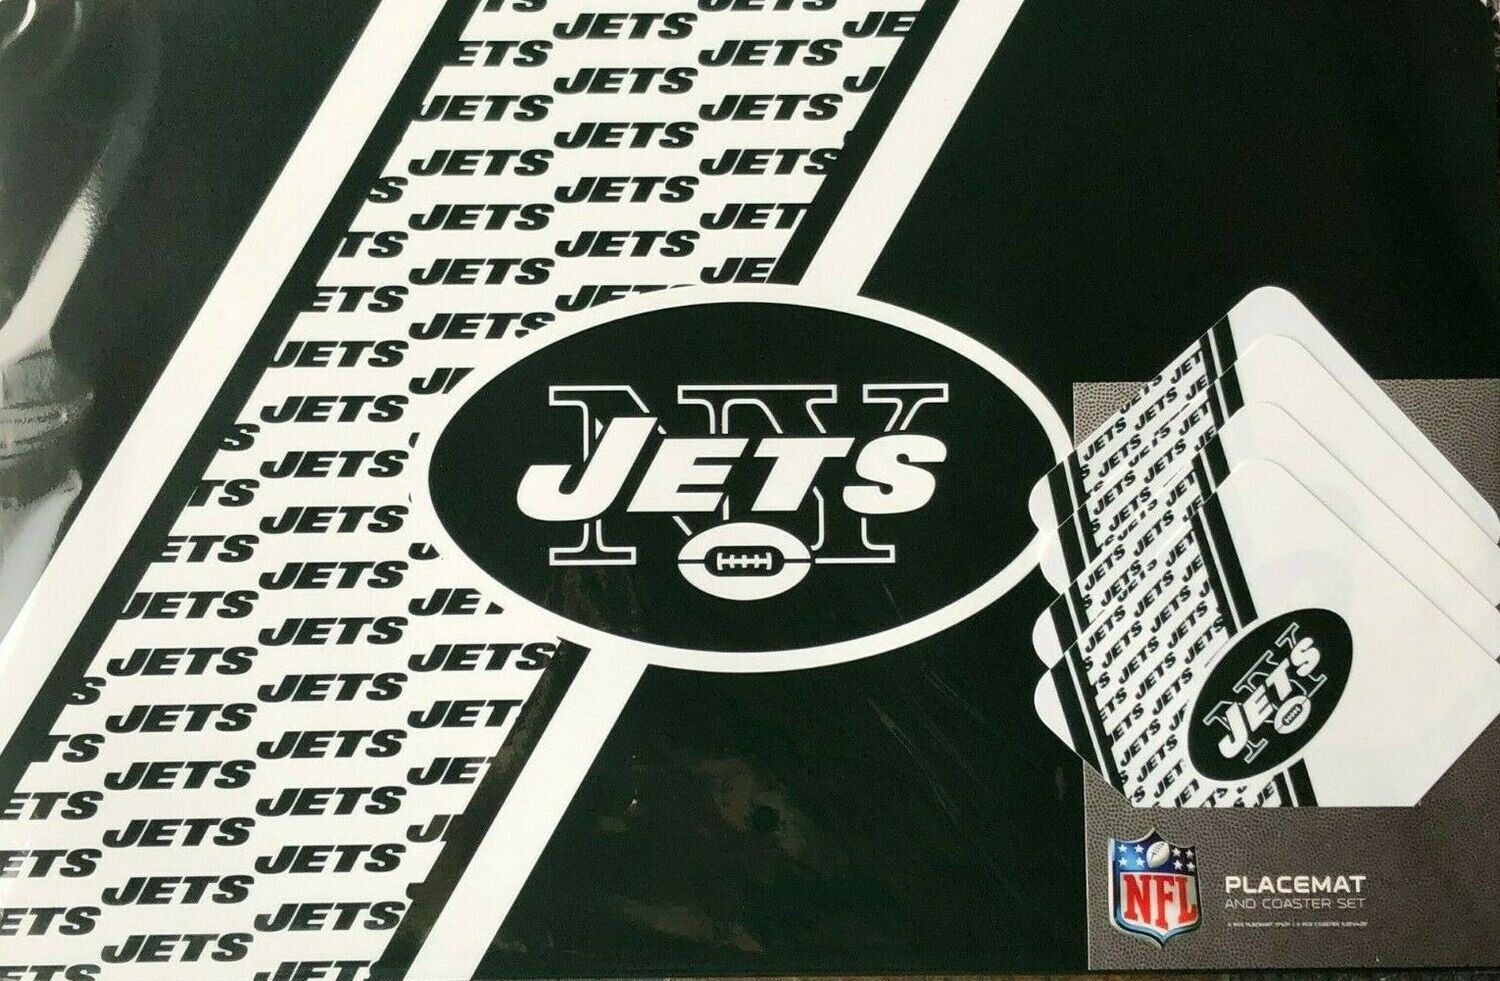 Placemat & Coaster Set - NFL New York Jets